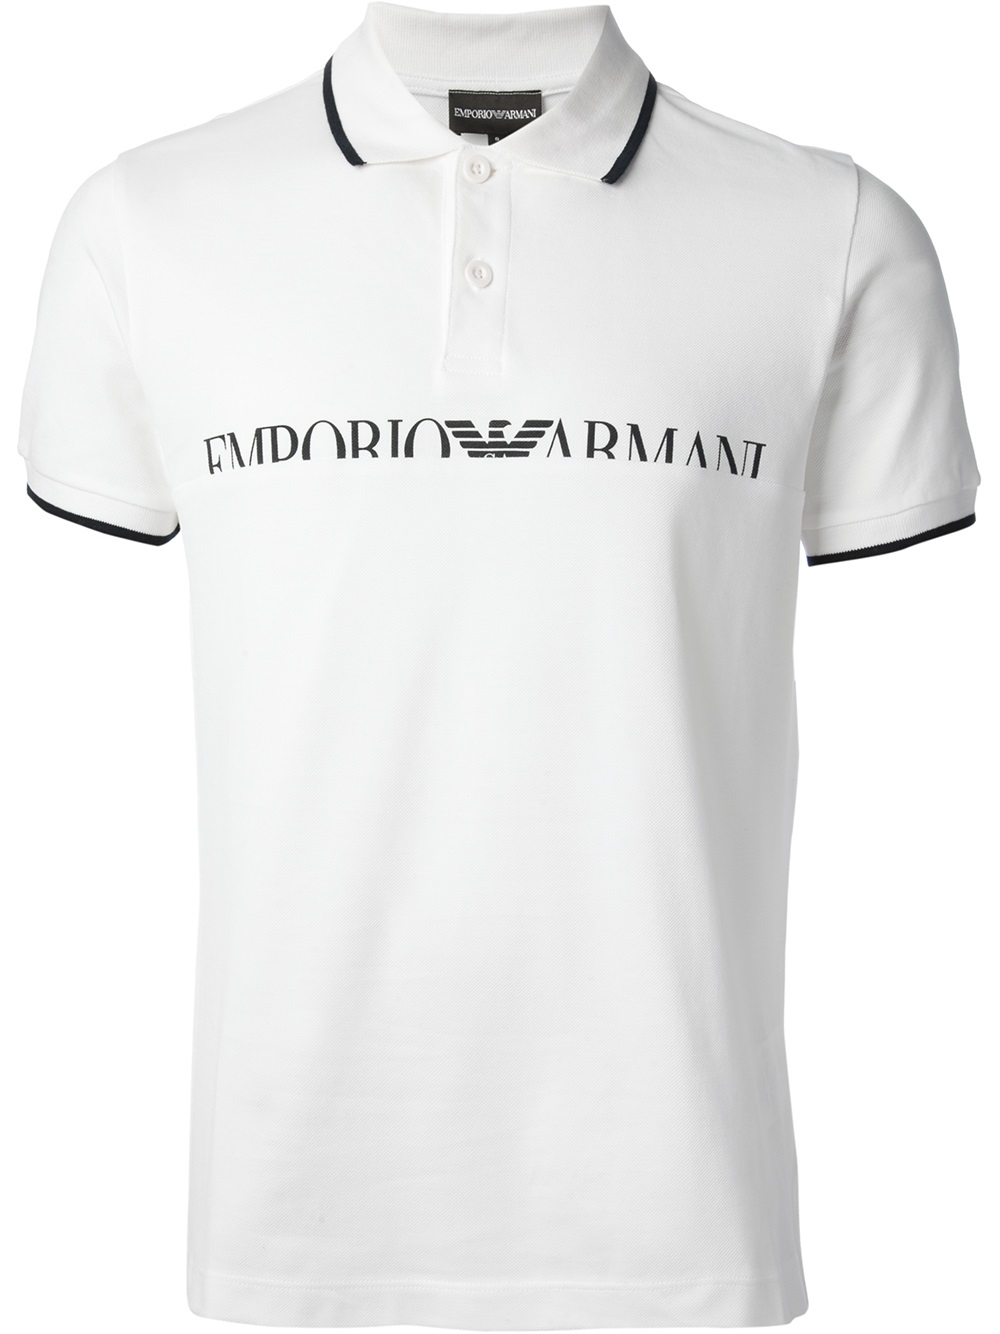 White Armani Polo Shirt Deals, SAVE 49% - www.fourwoodcapital.com